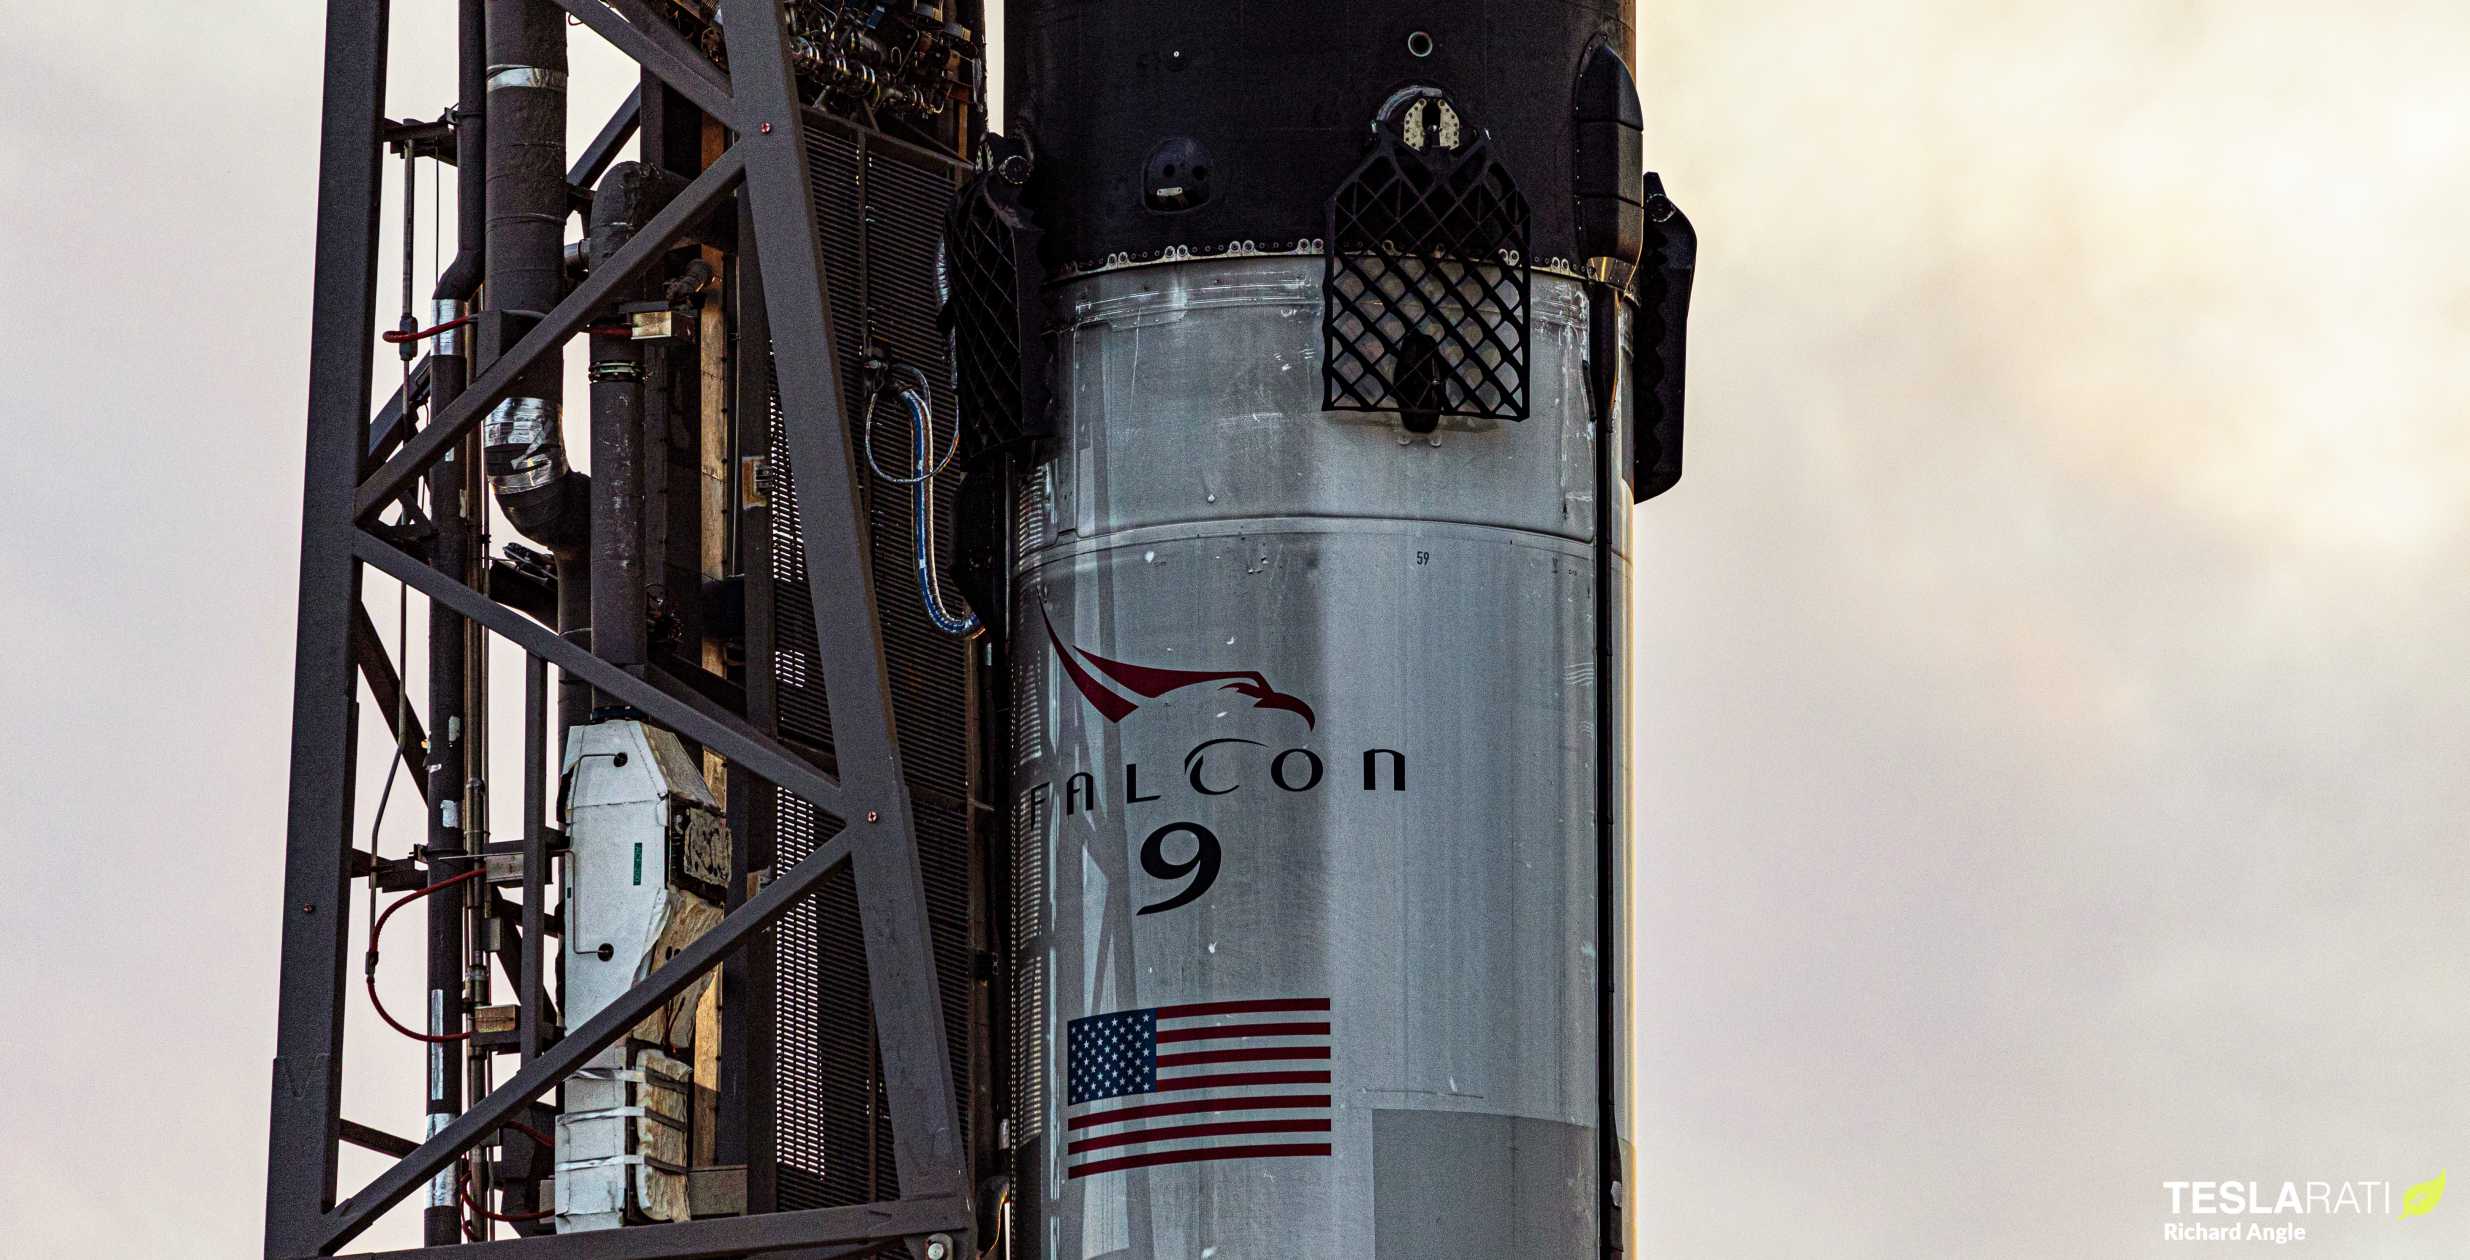 CRS-20 Dragon C112 Falcon 9 B1059 (Richard Angle) pre launch landing (2) crop (c)